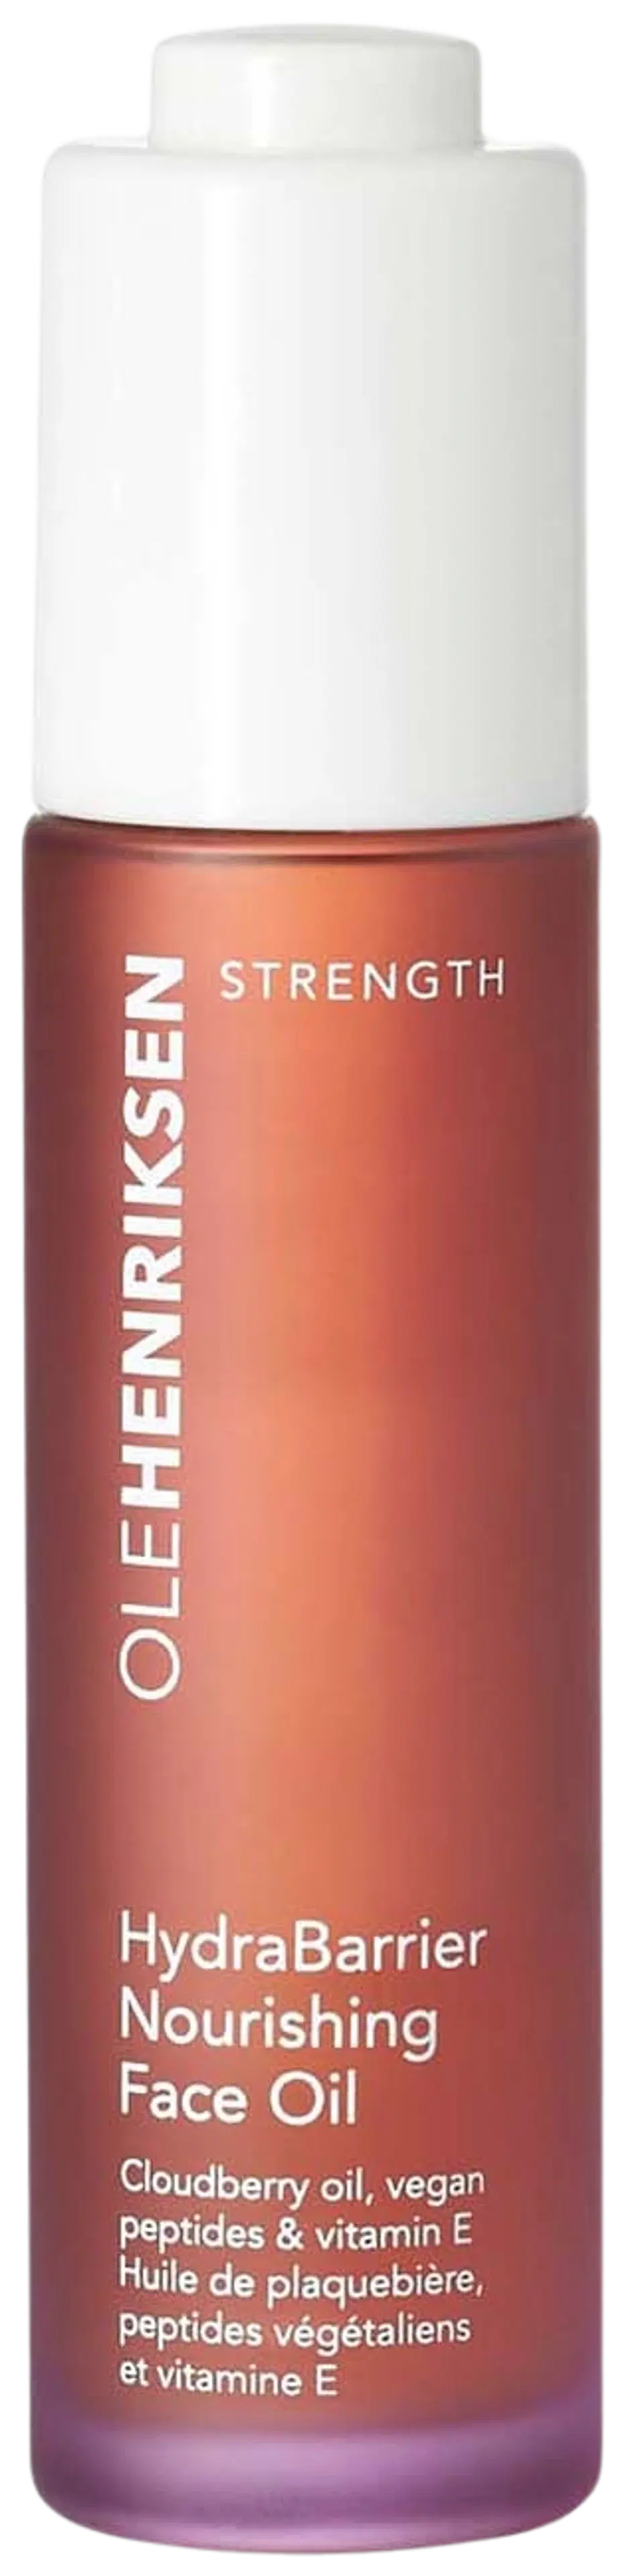 Ole Henriksen Strength HydraBarrier Face Oil kasvoöljy 30 ml